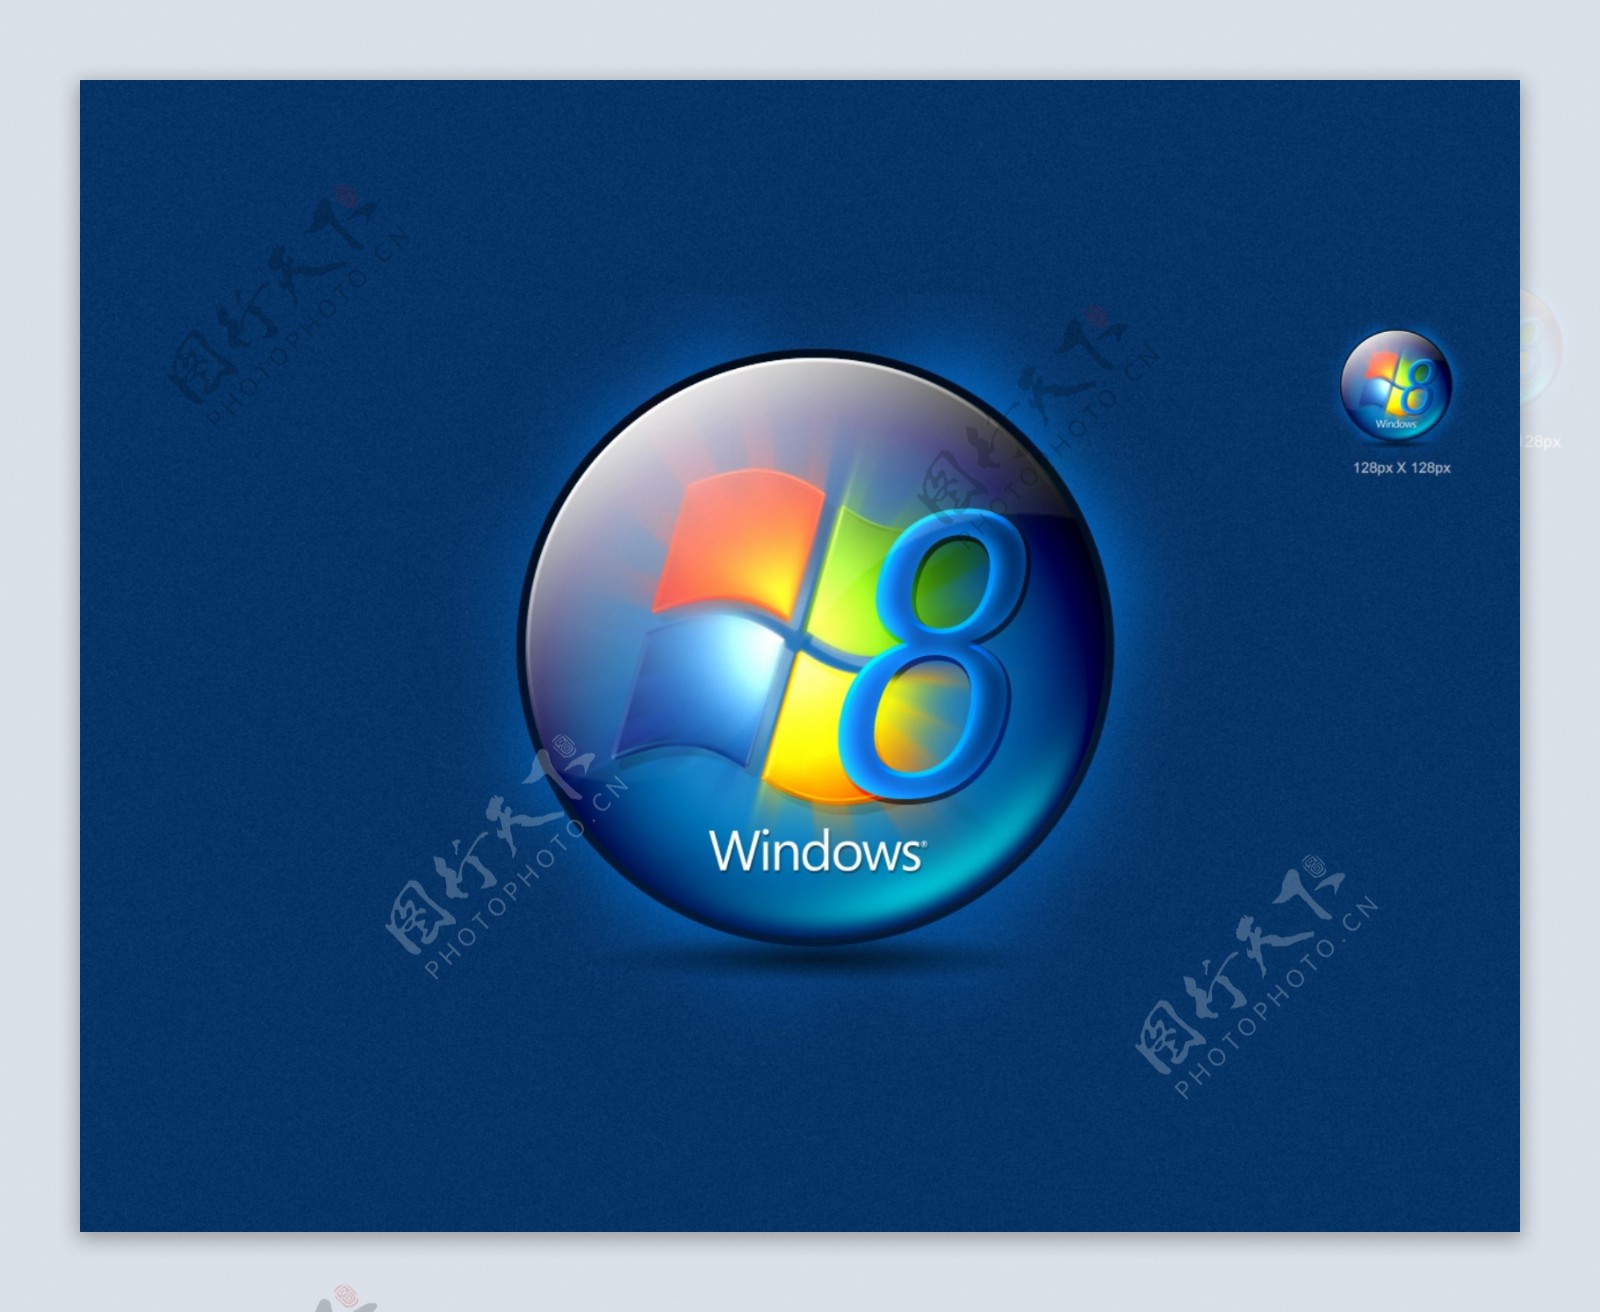 Window8标识标志icon